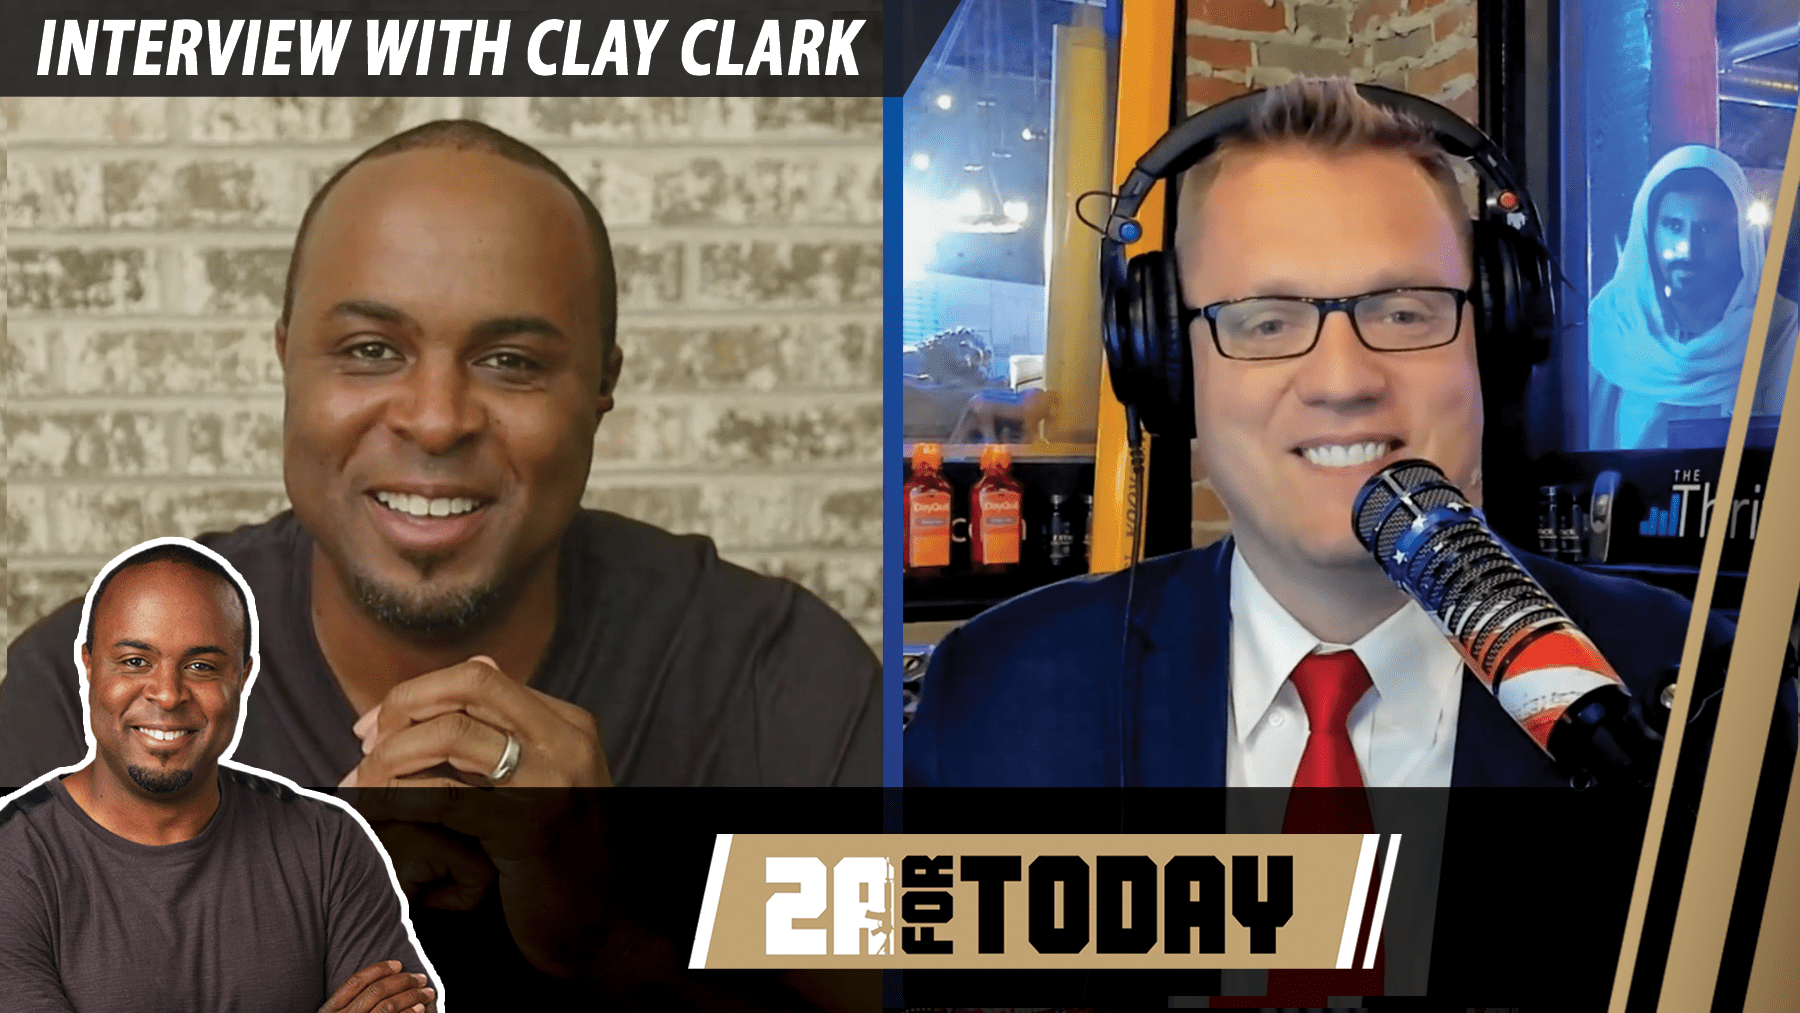 ReAwaken America's Clay Clark | 2A For Today